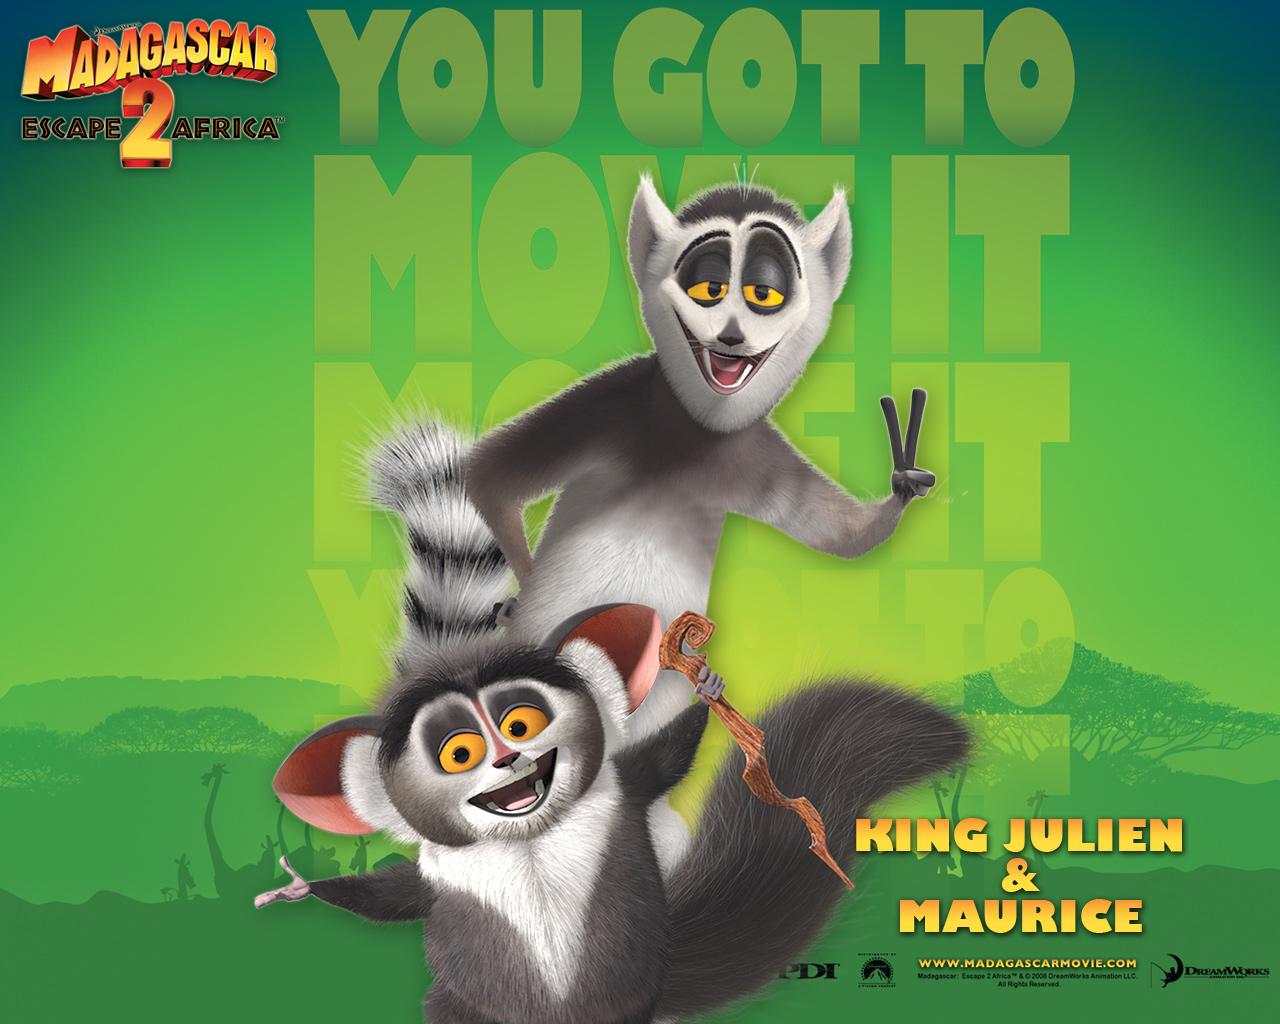 Madagascar 2 King Julien and Maurice Full HD Wallpaper Image